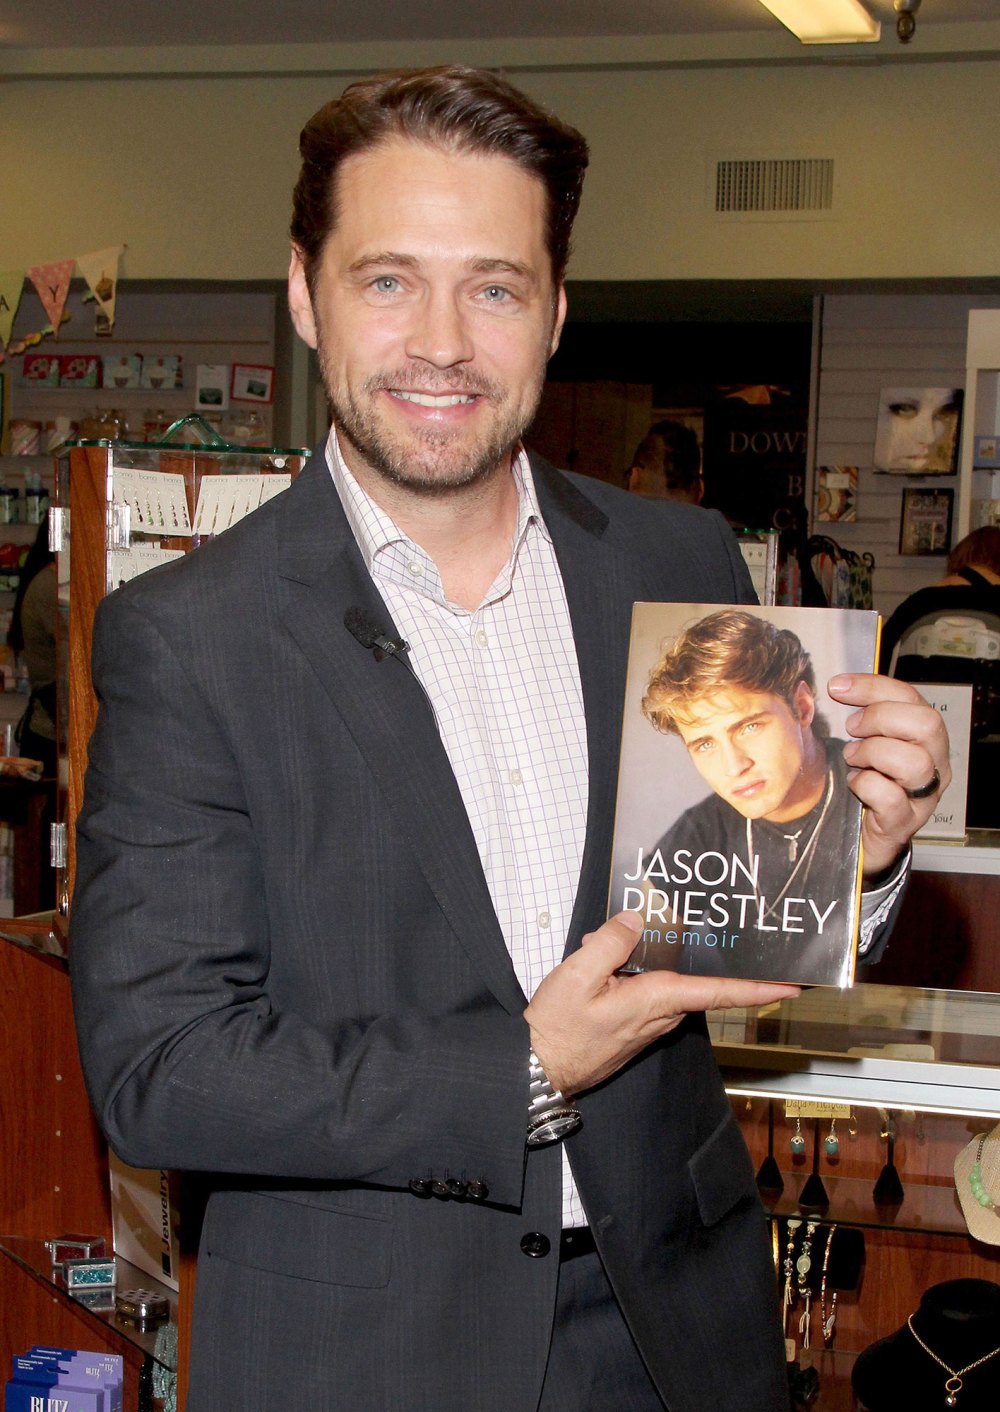 Jason Priestley Dishes on Shannen Doherty, Roommate Brad Pitt in New Memoir